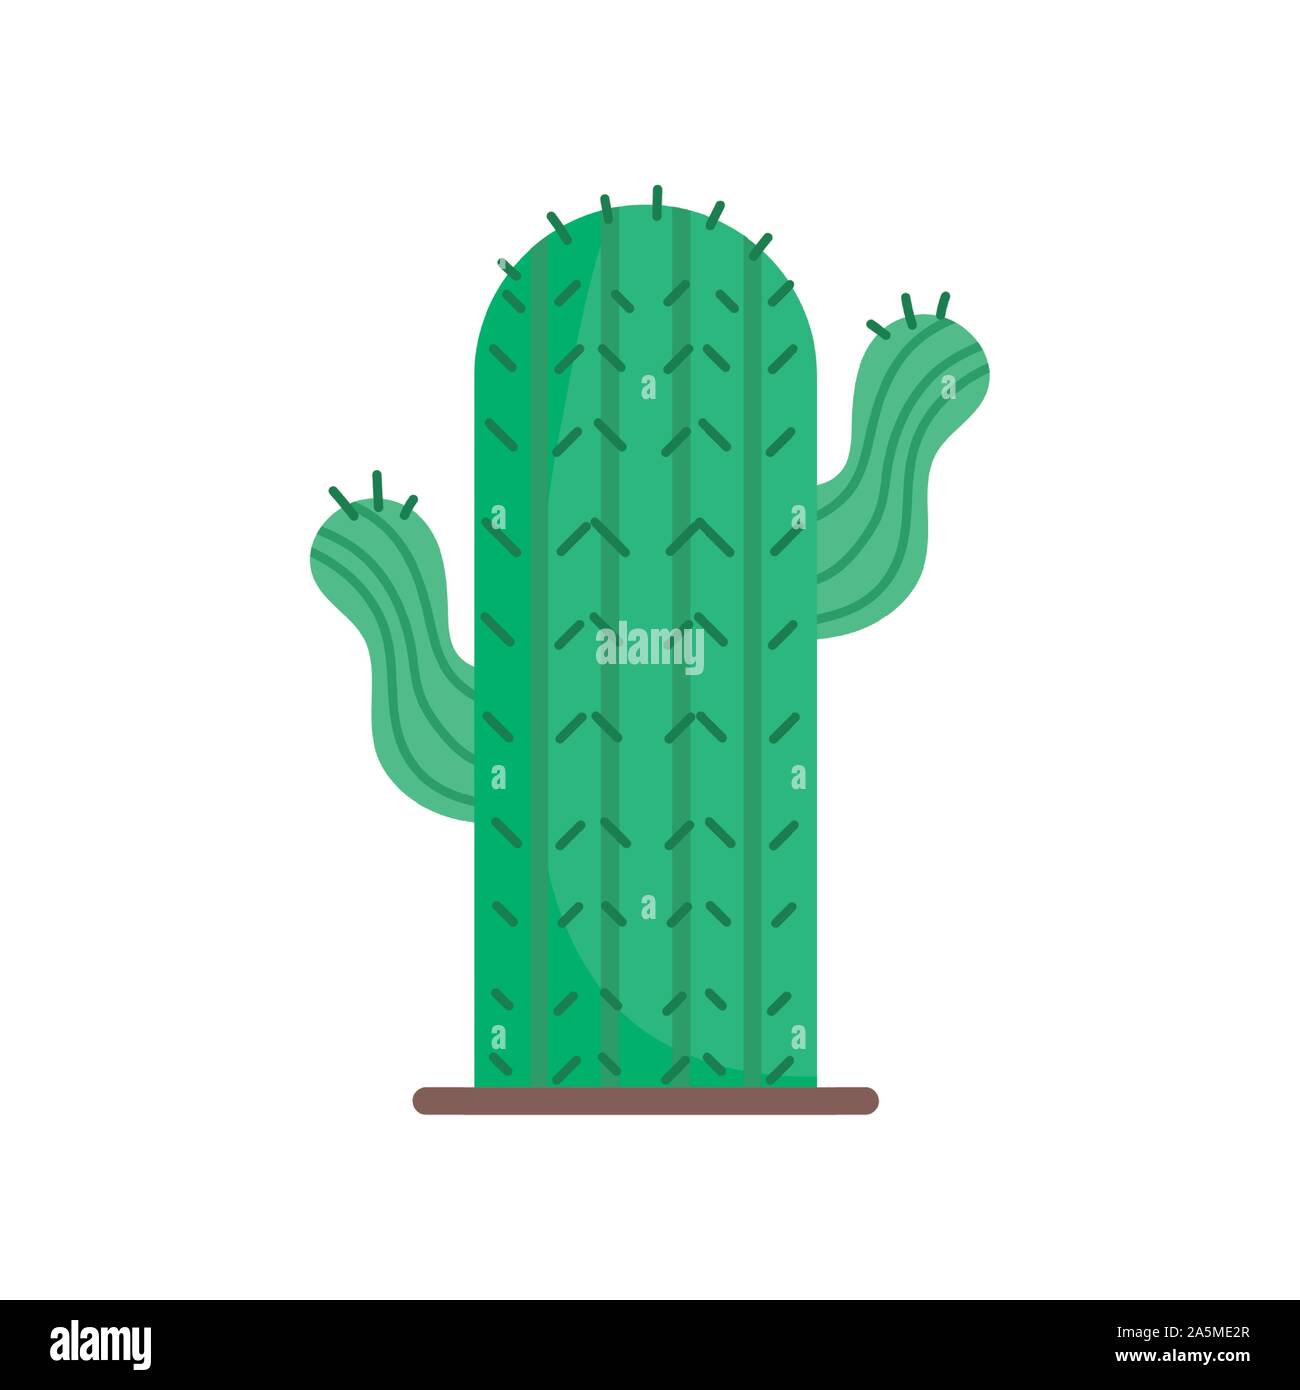 The Cut Shoppe Hello Cactus Card